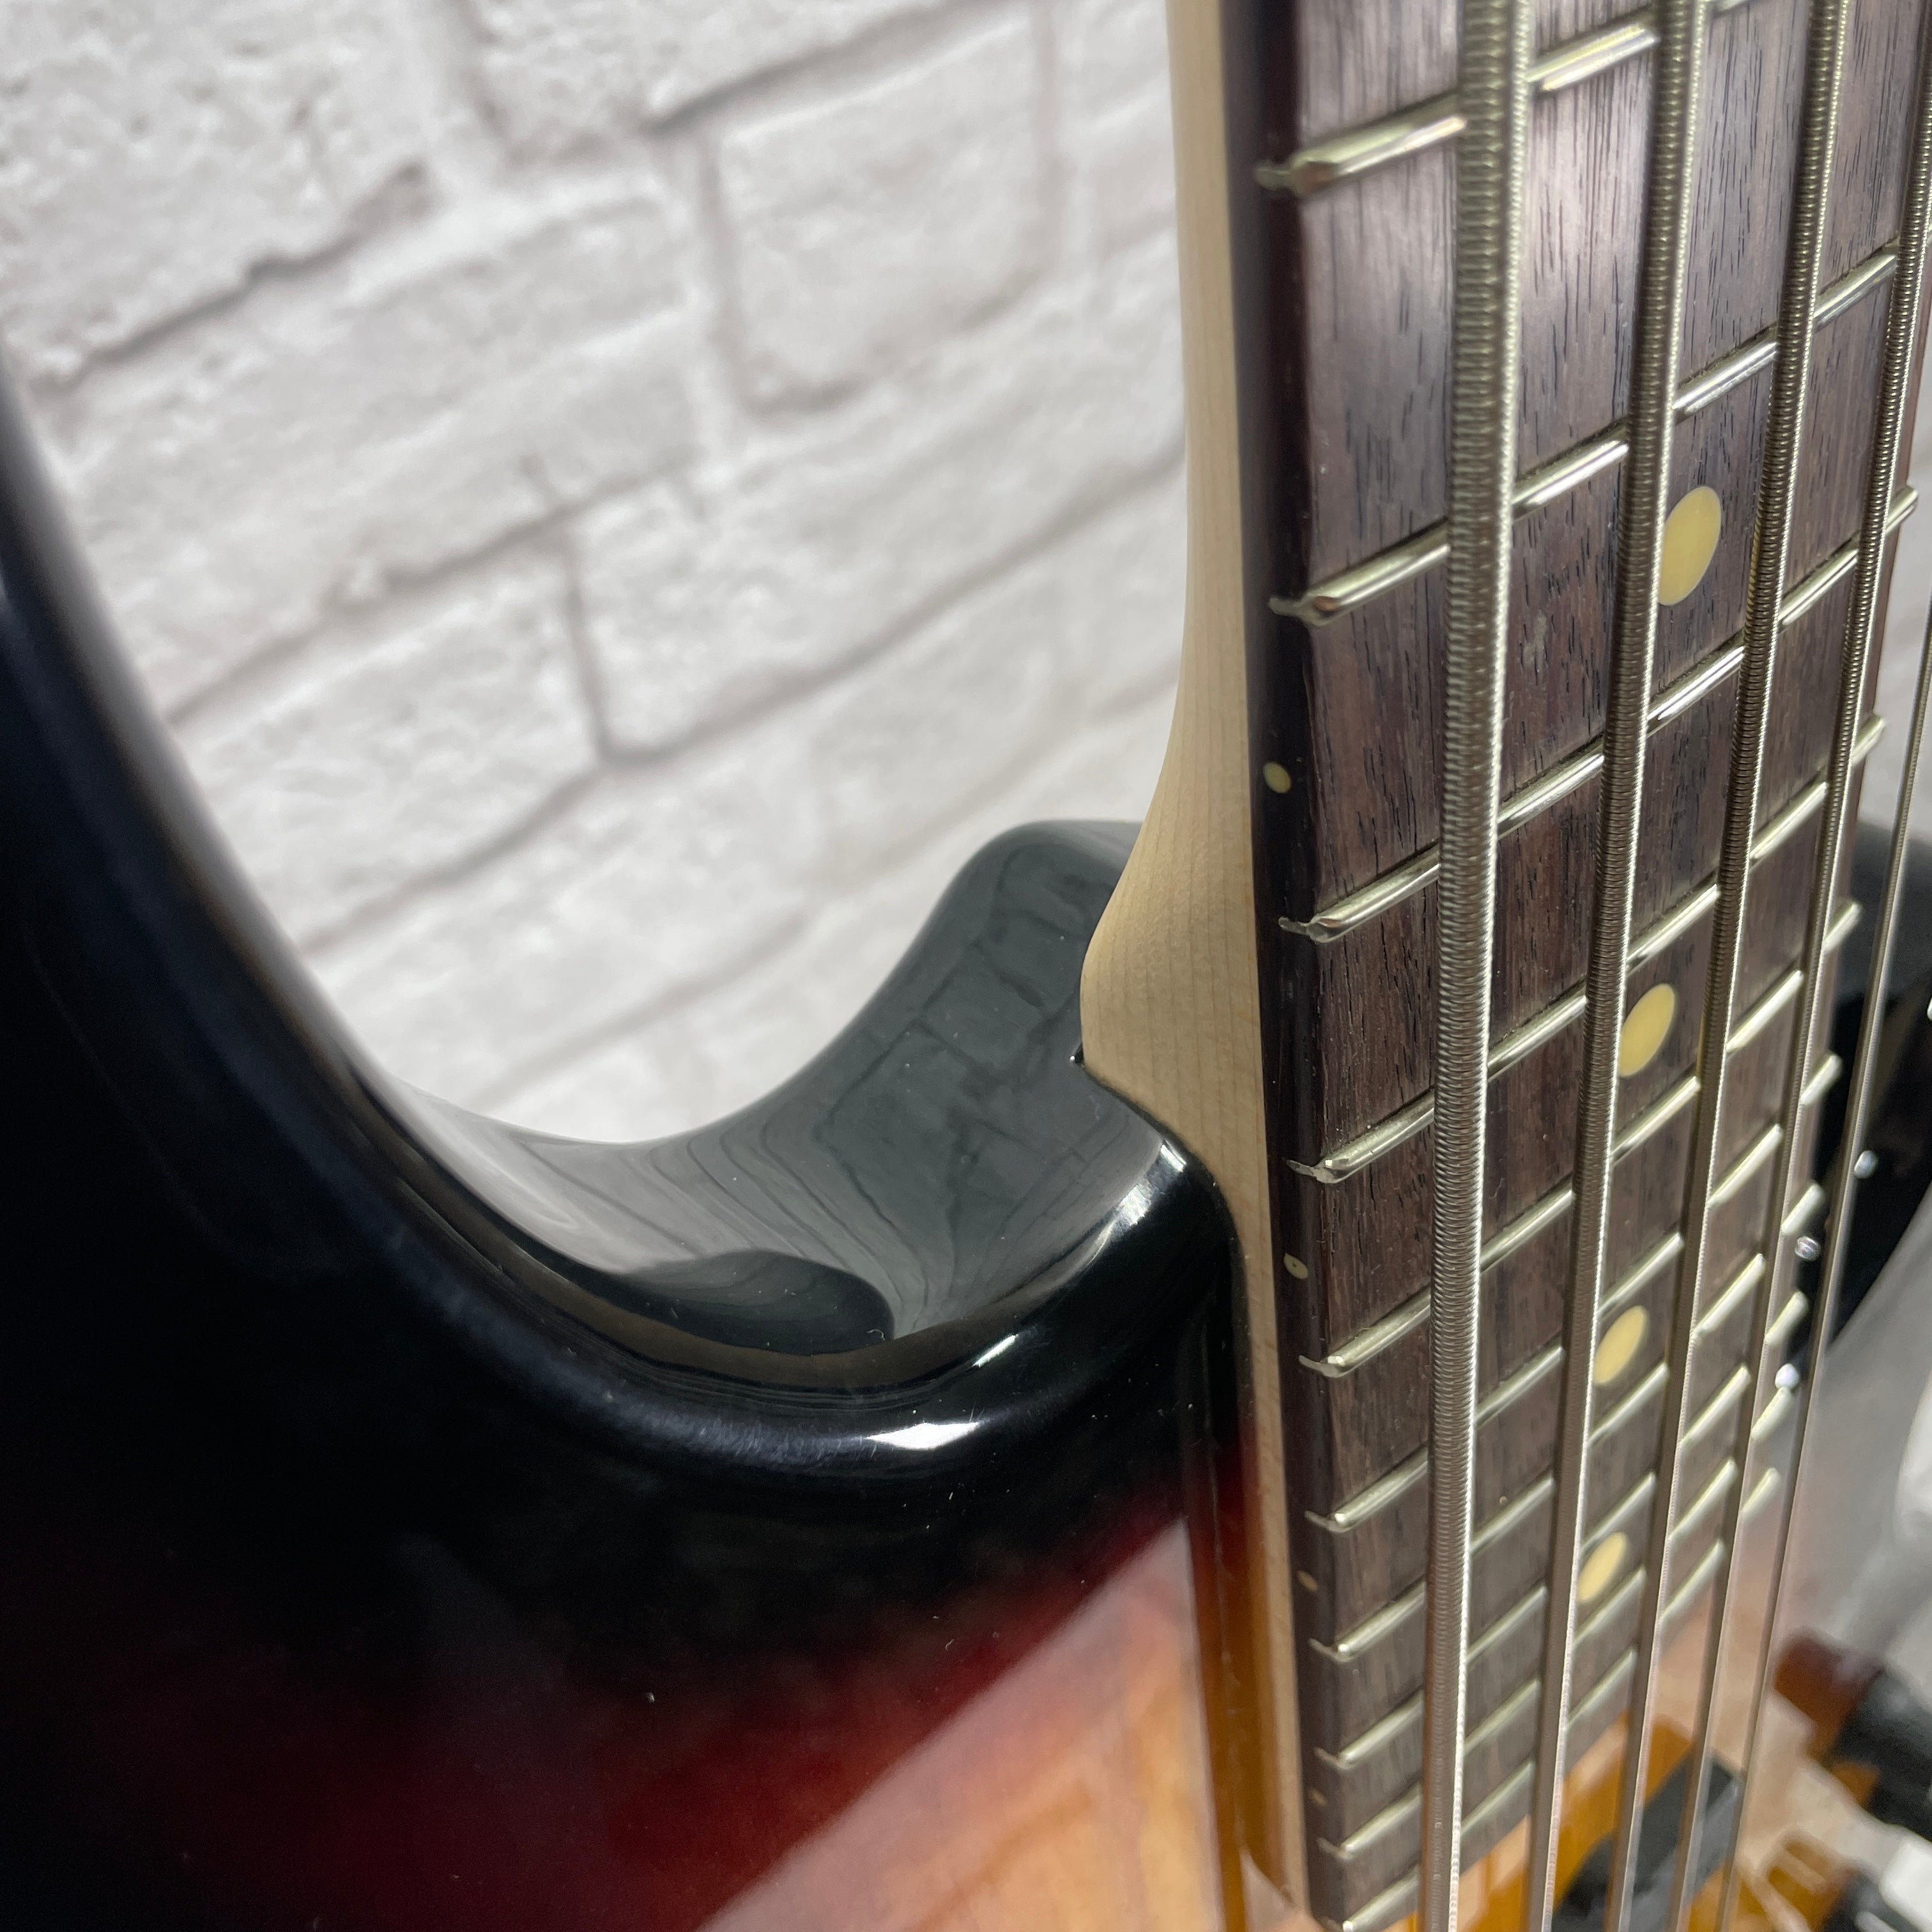 Used:  Lakland Skyline 55-02 5-String Bass